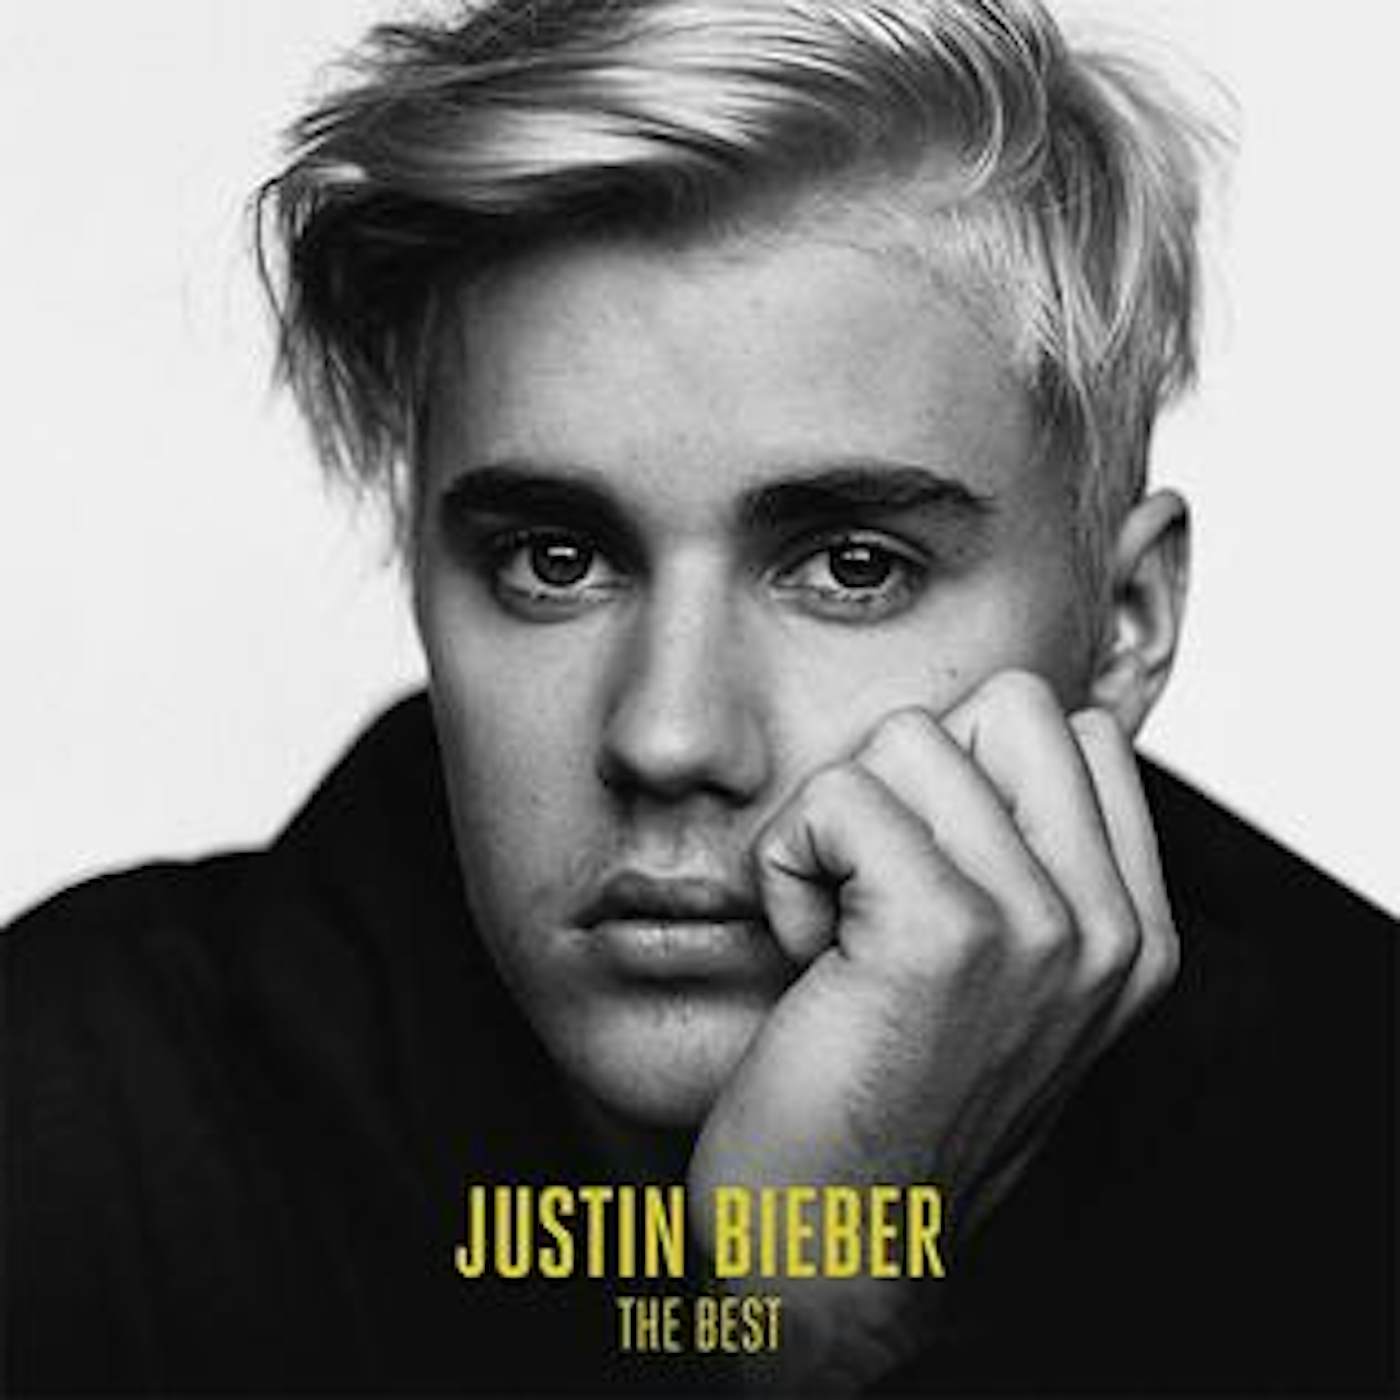 Justin Bieber BEST CD